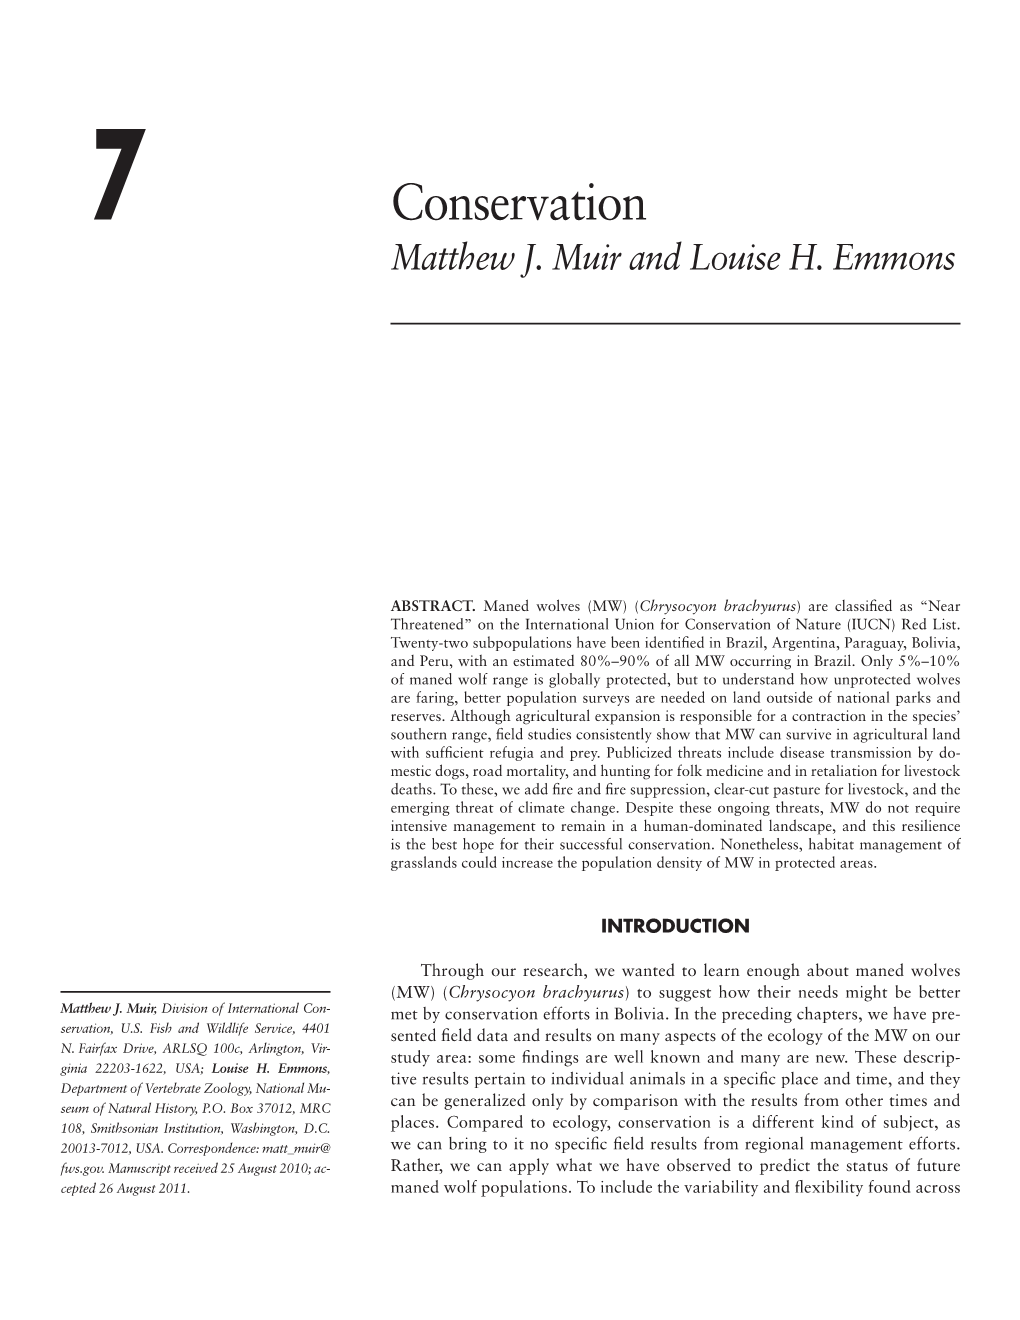 Conservation Matthew J